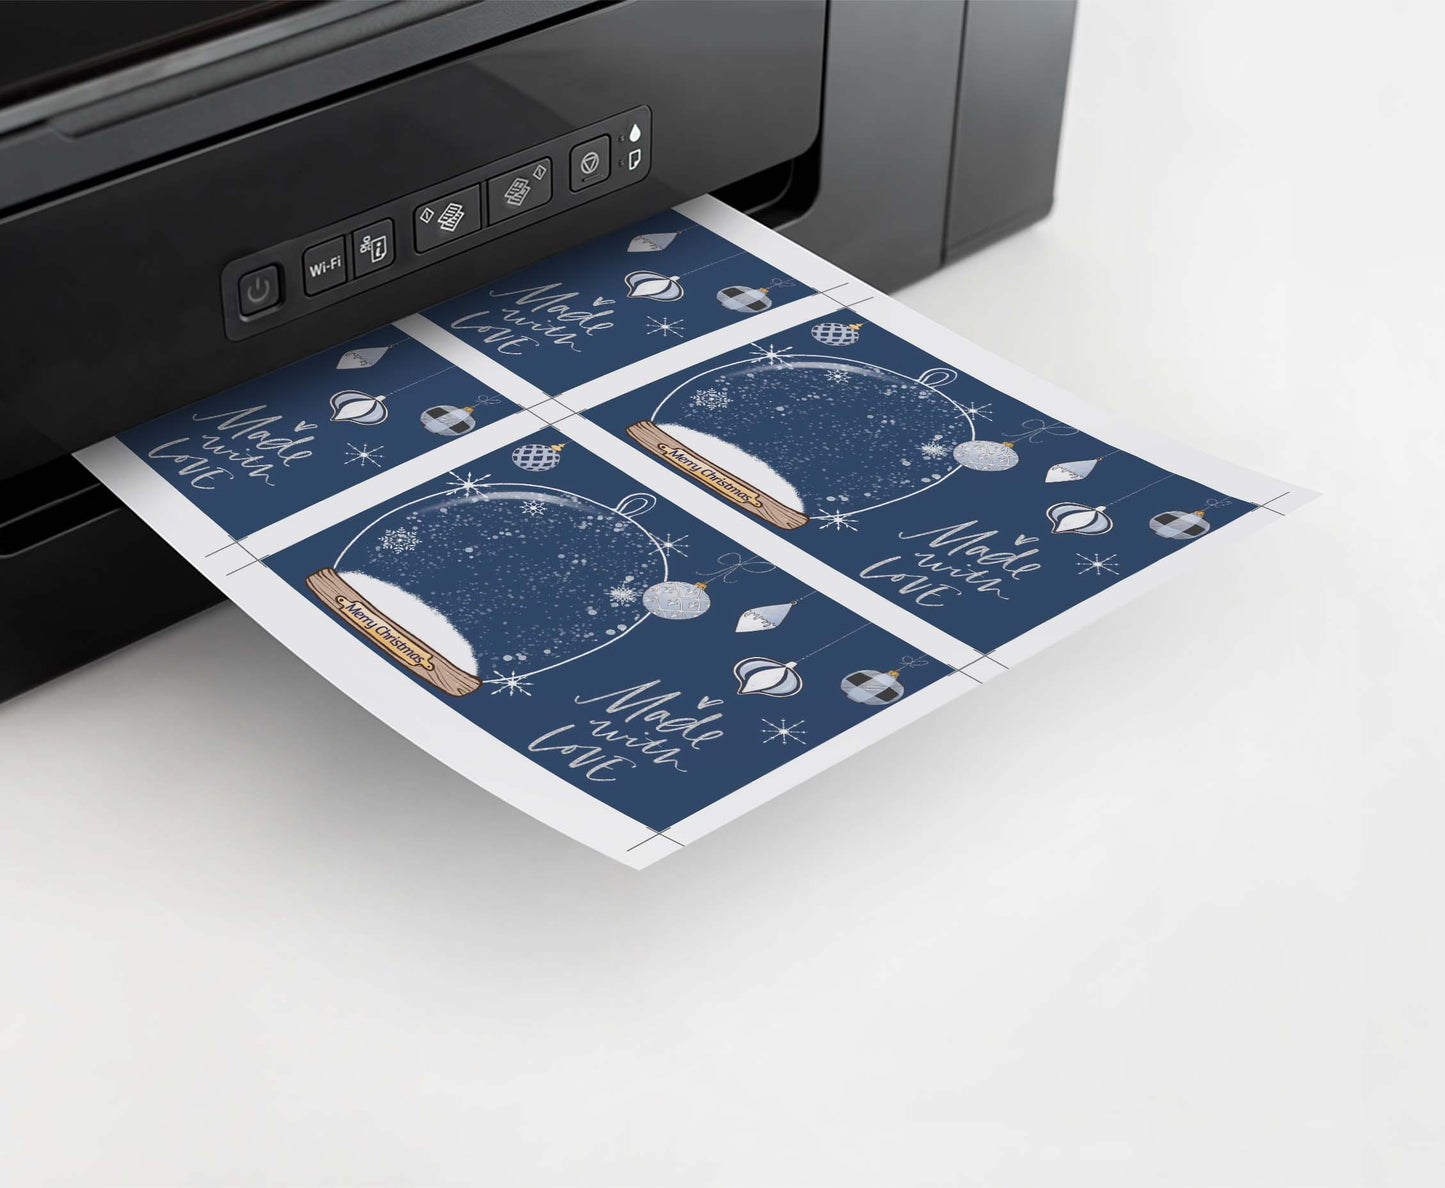 Christmas Snow Globe cookie Card | Christmas Printable Cards - 112